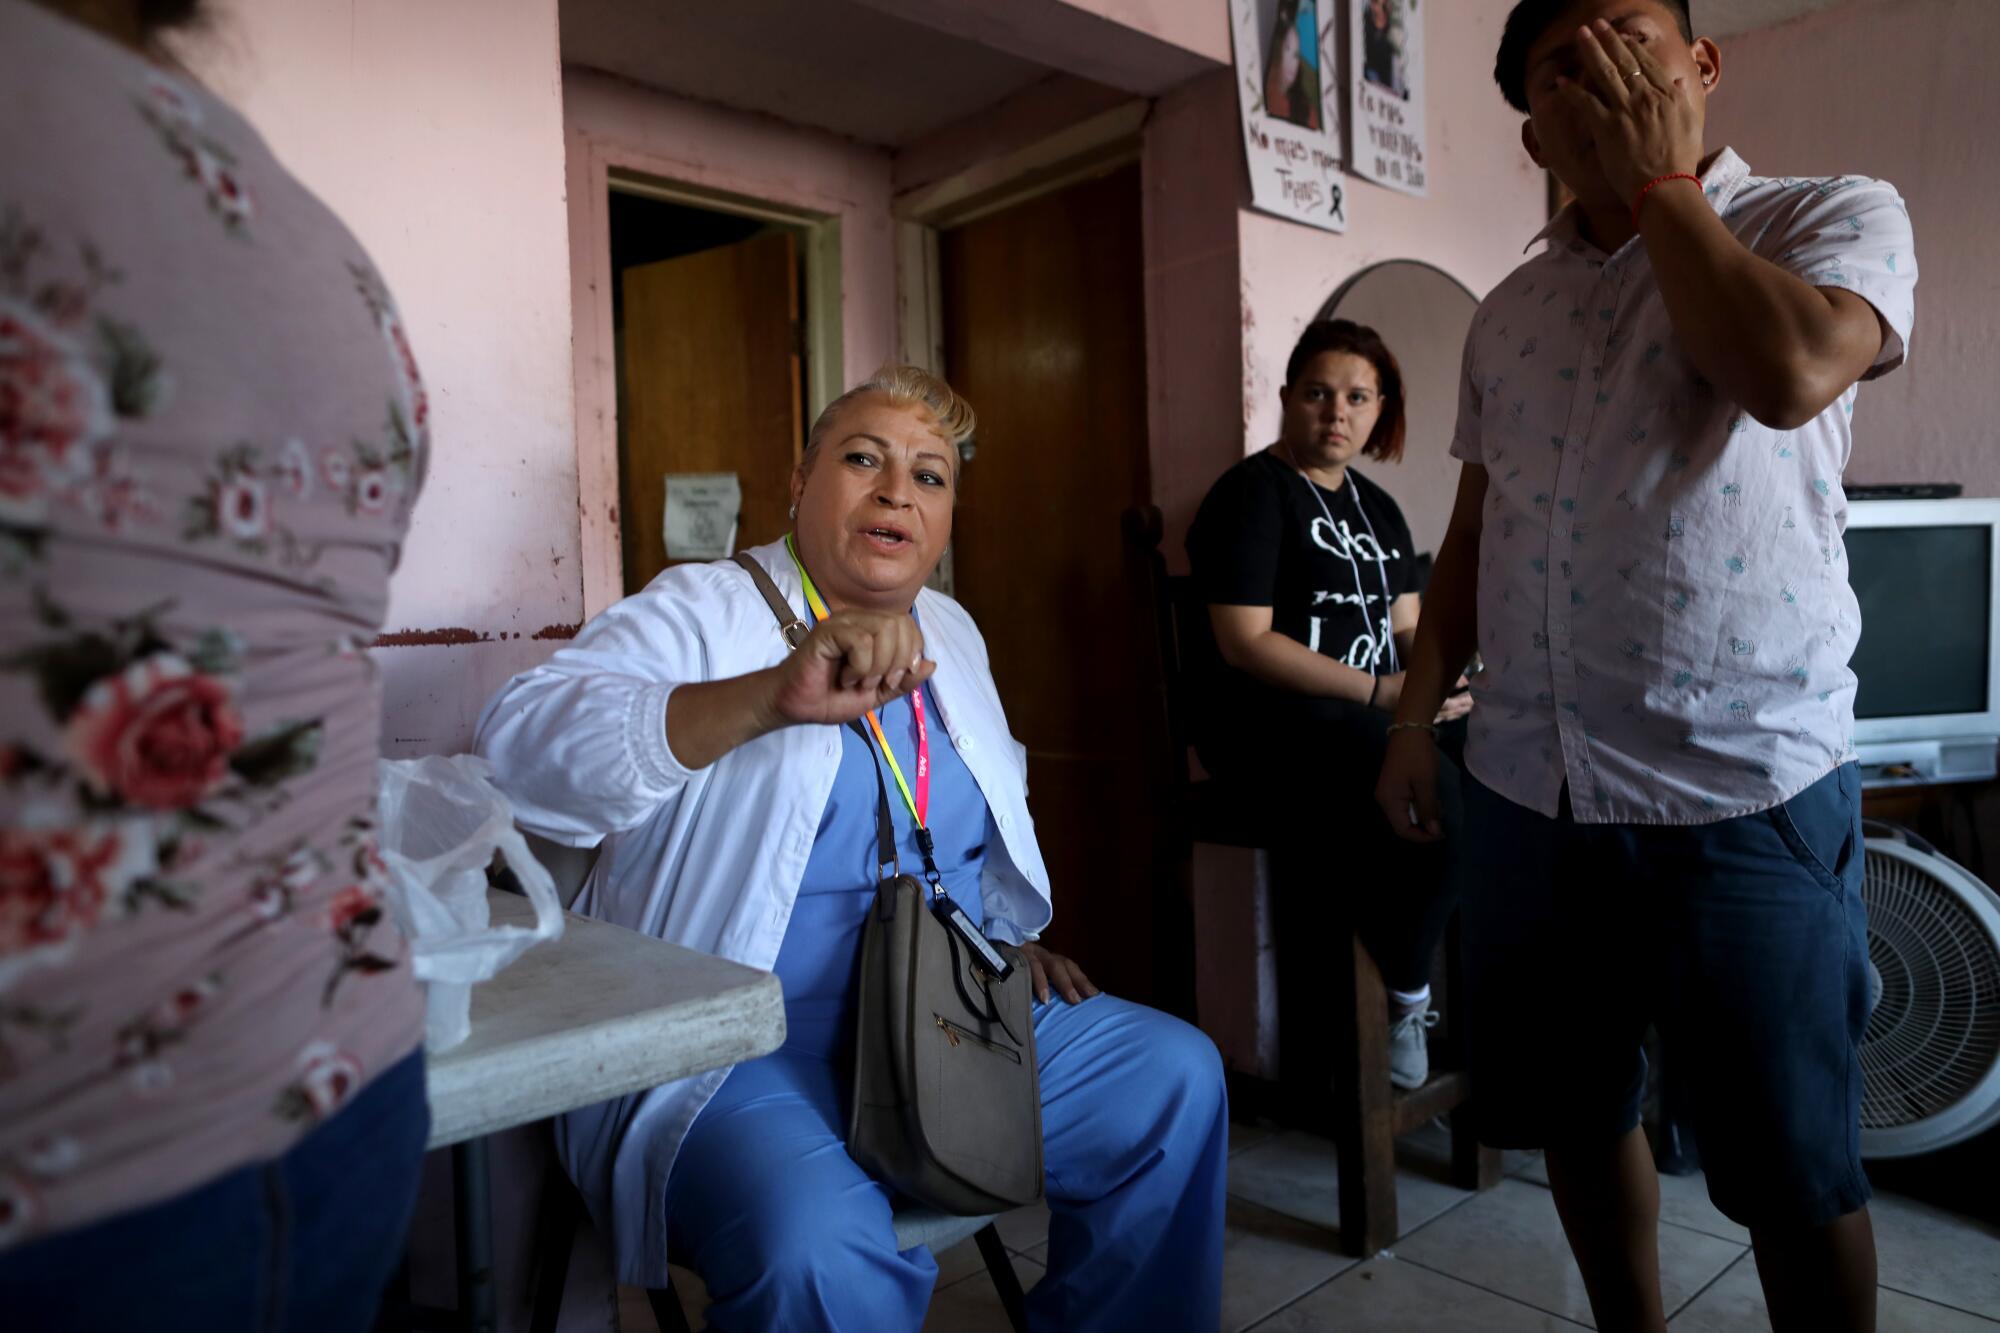 Respetttrans LGBTQ migrant shelter in Ciudad Juarez